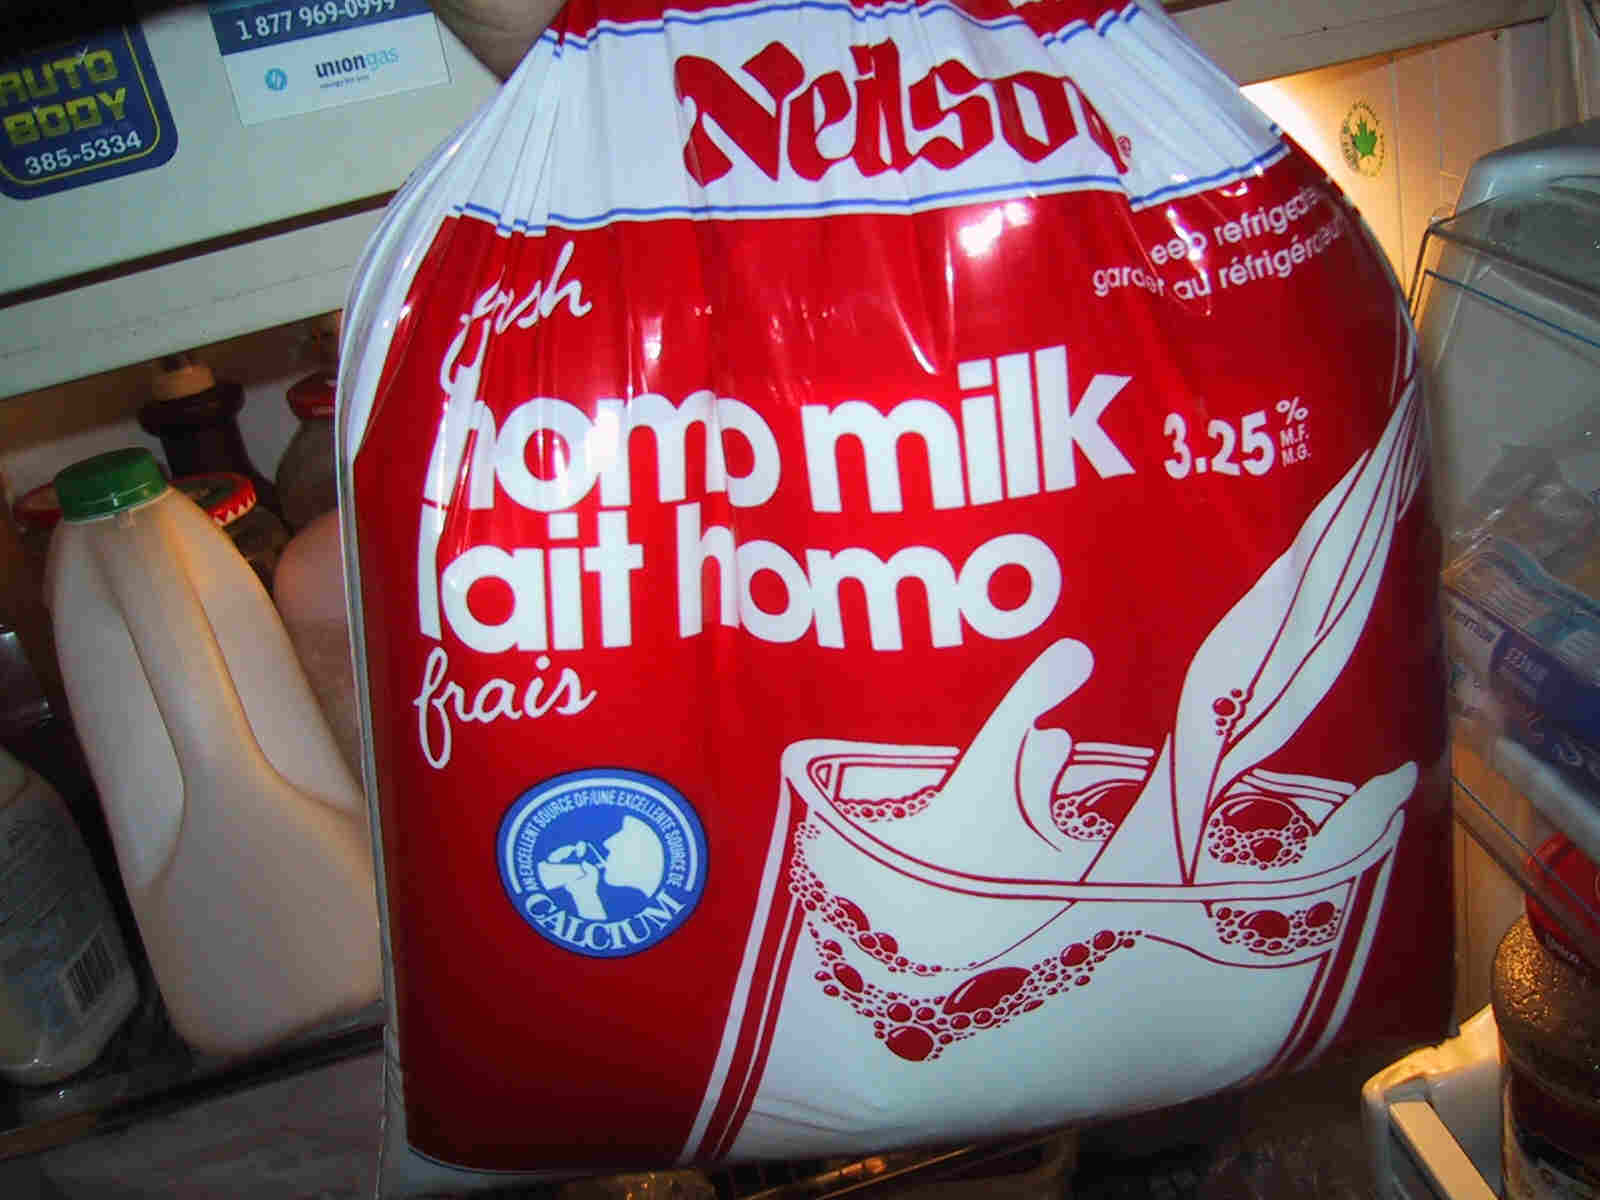 Inside a bag. Canadian Milk Bag. Молоко в Канаде. Milk Bag Canada. Milk Bags in Canada.